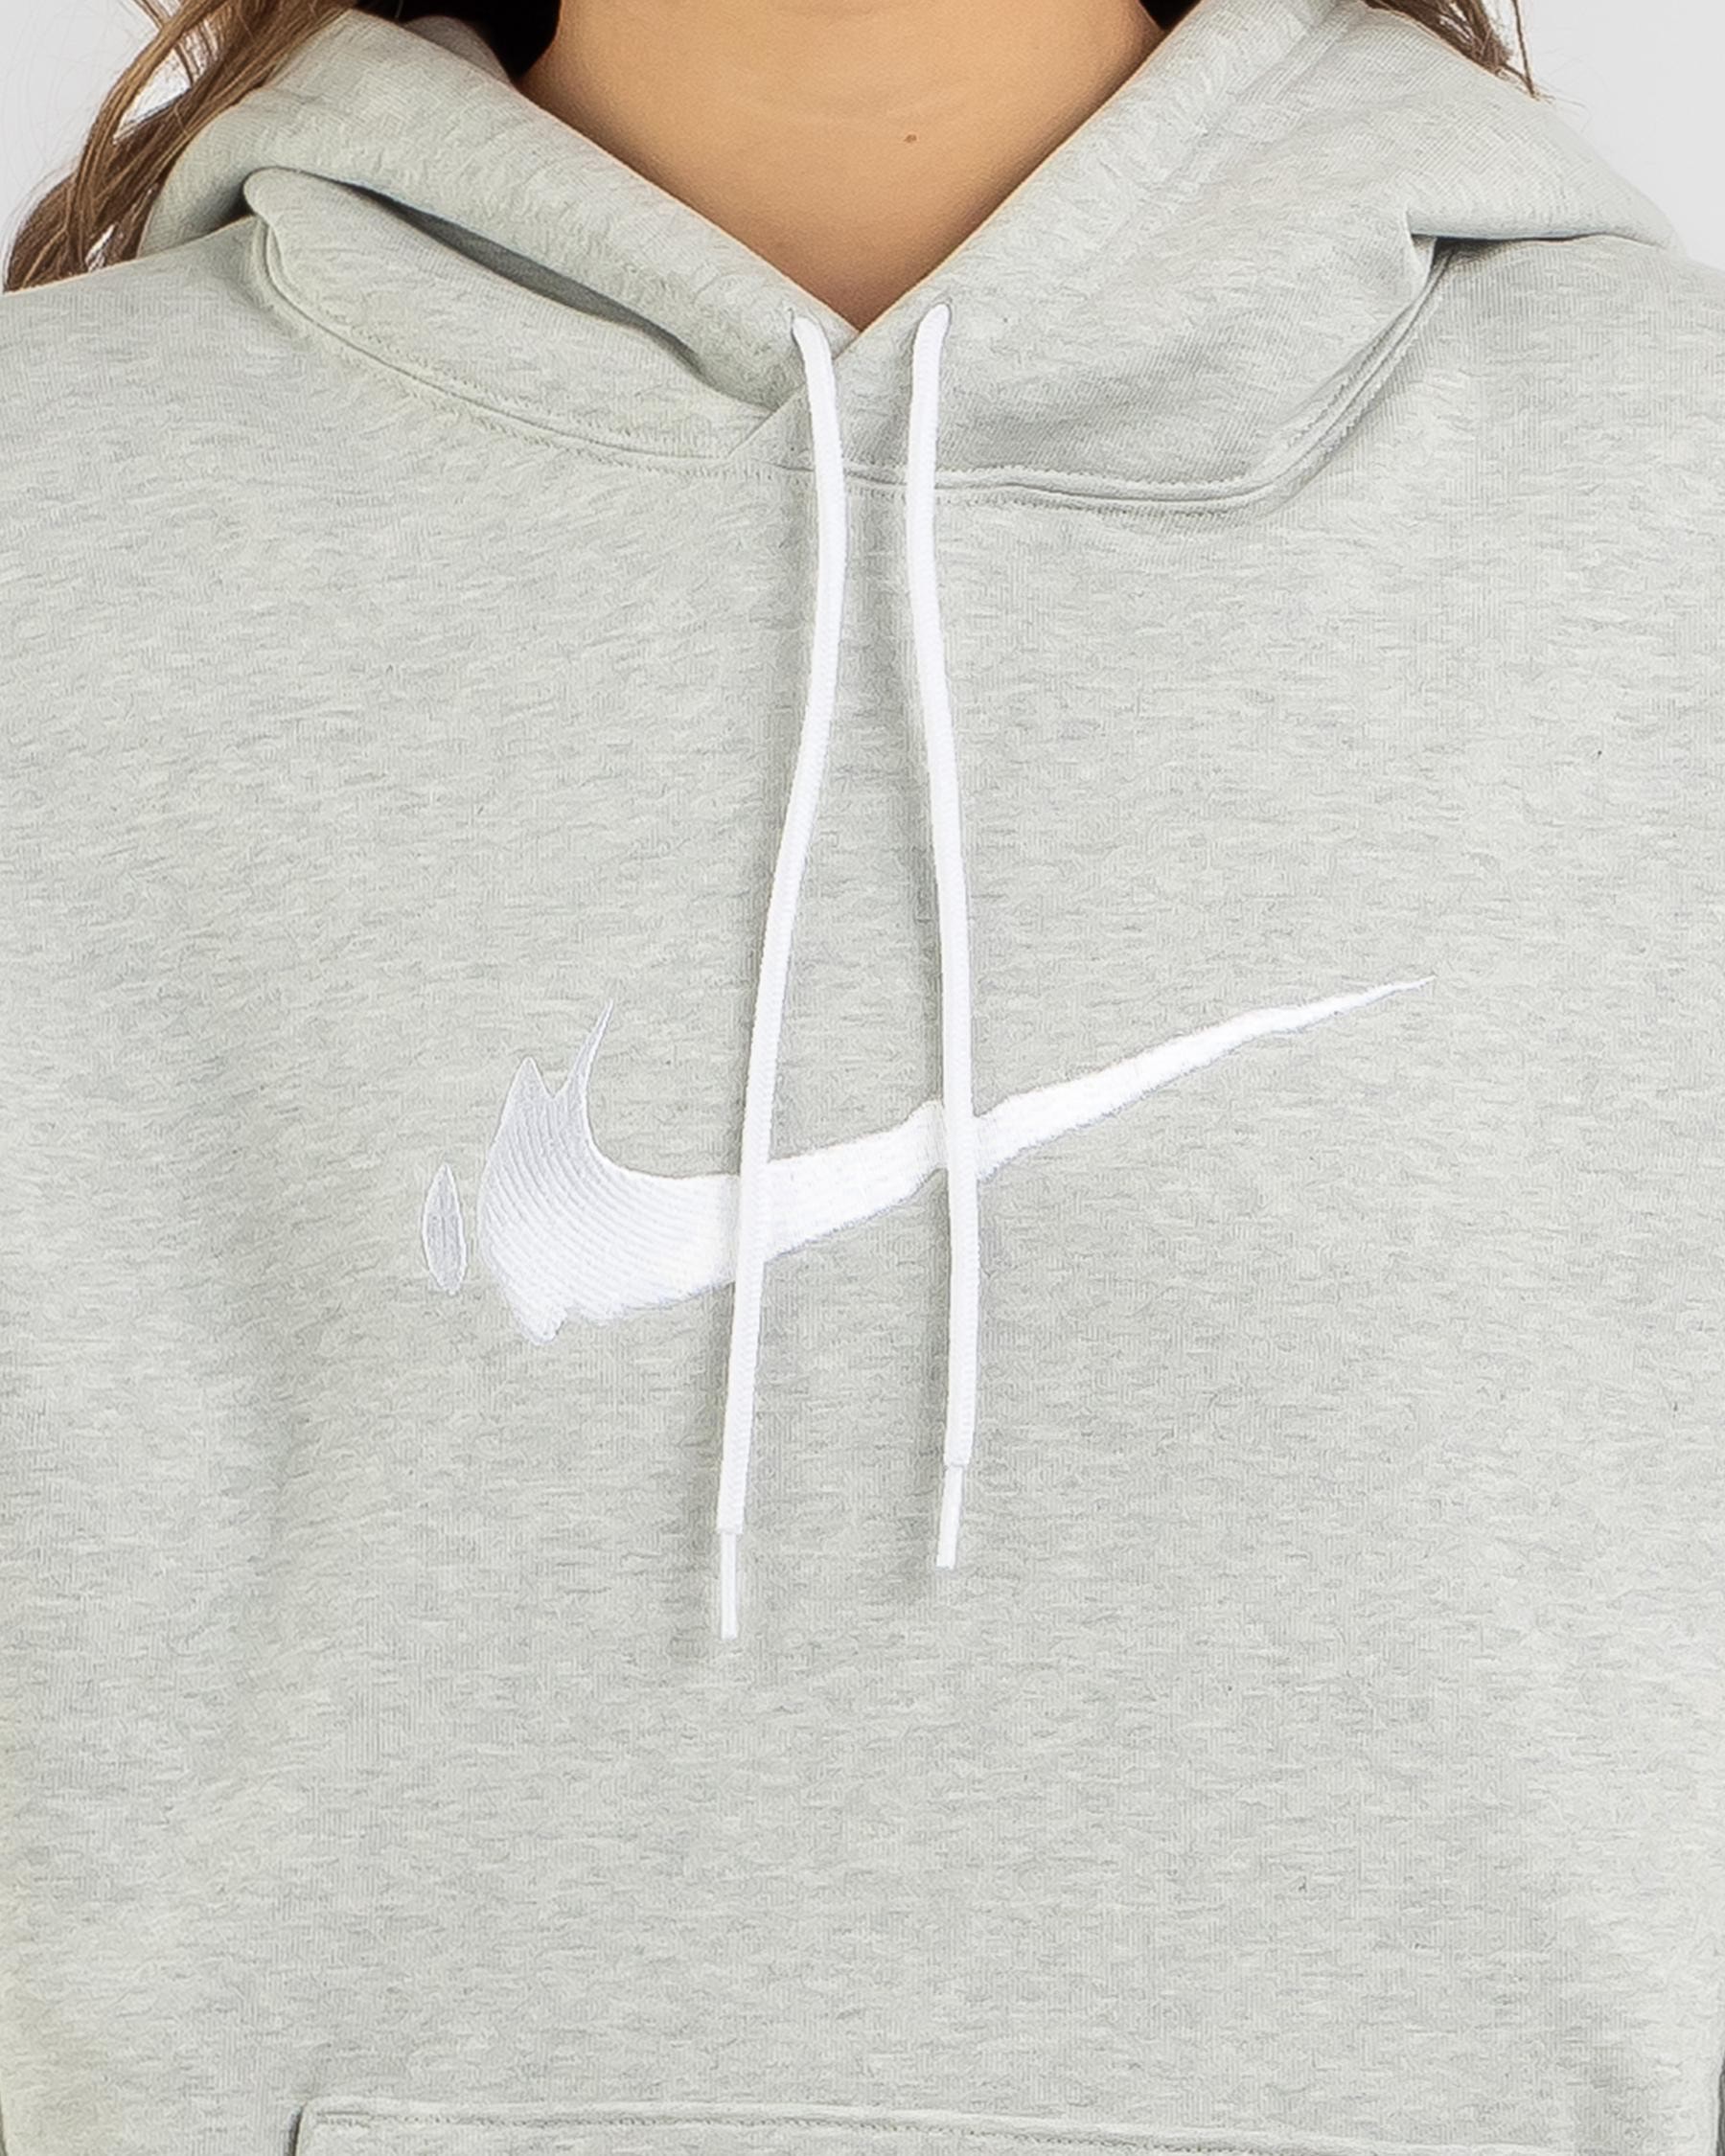 Nike SB Copyshop Hoodie In Grey Heather - Fast Shipping & Easy Returns ...